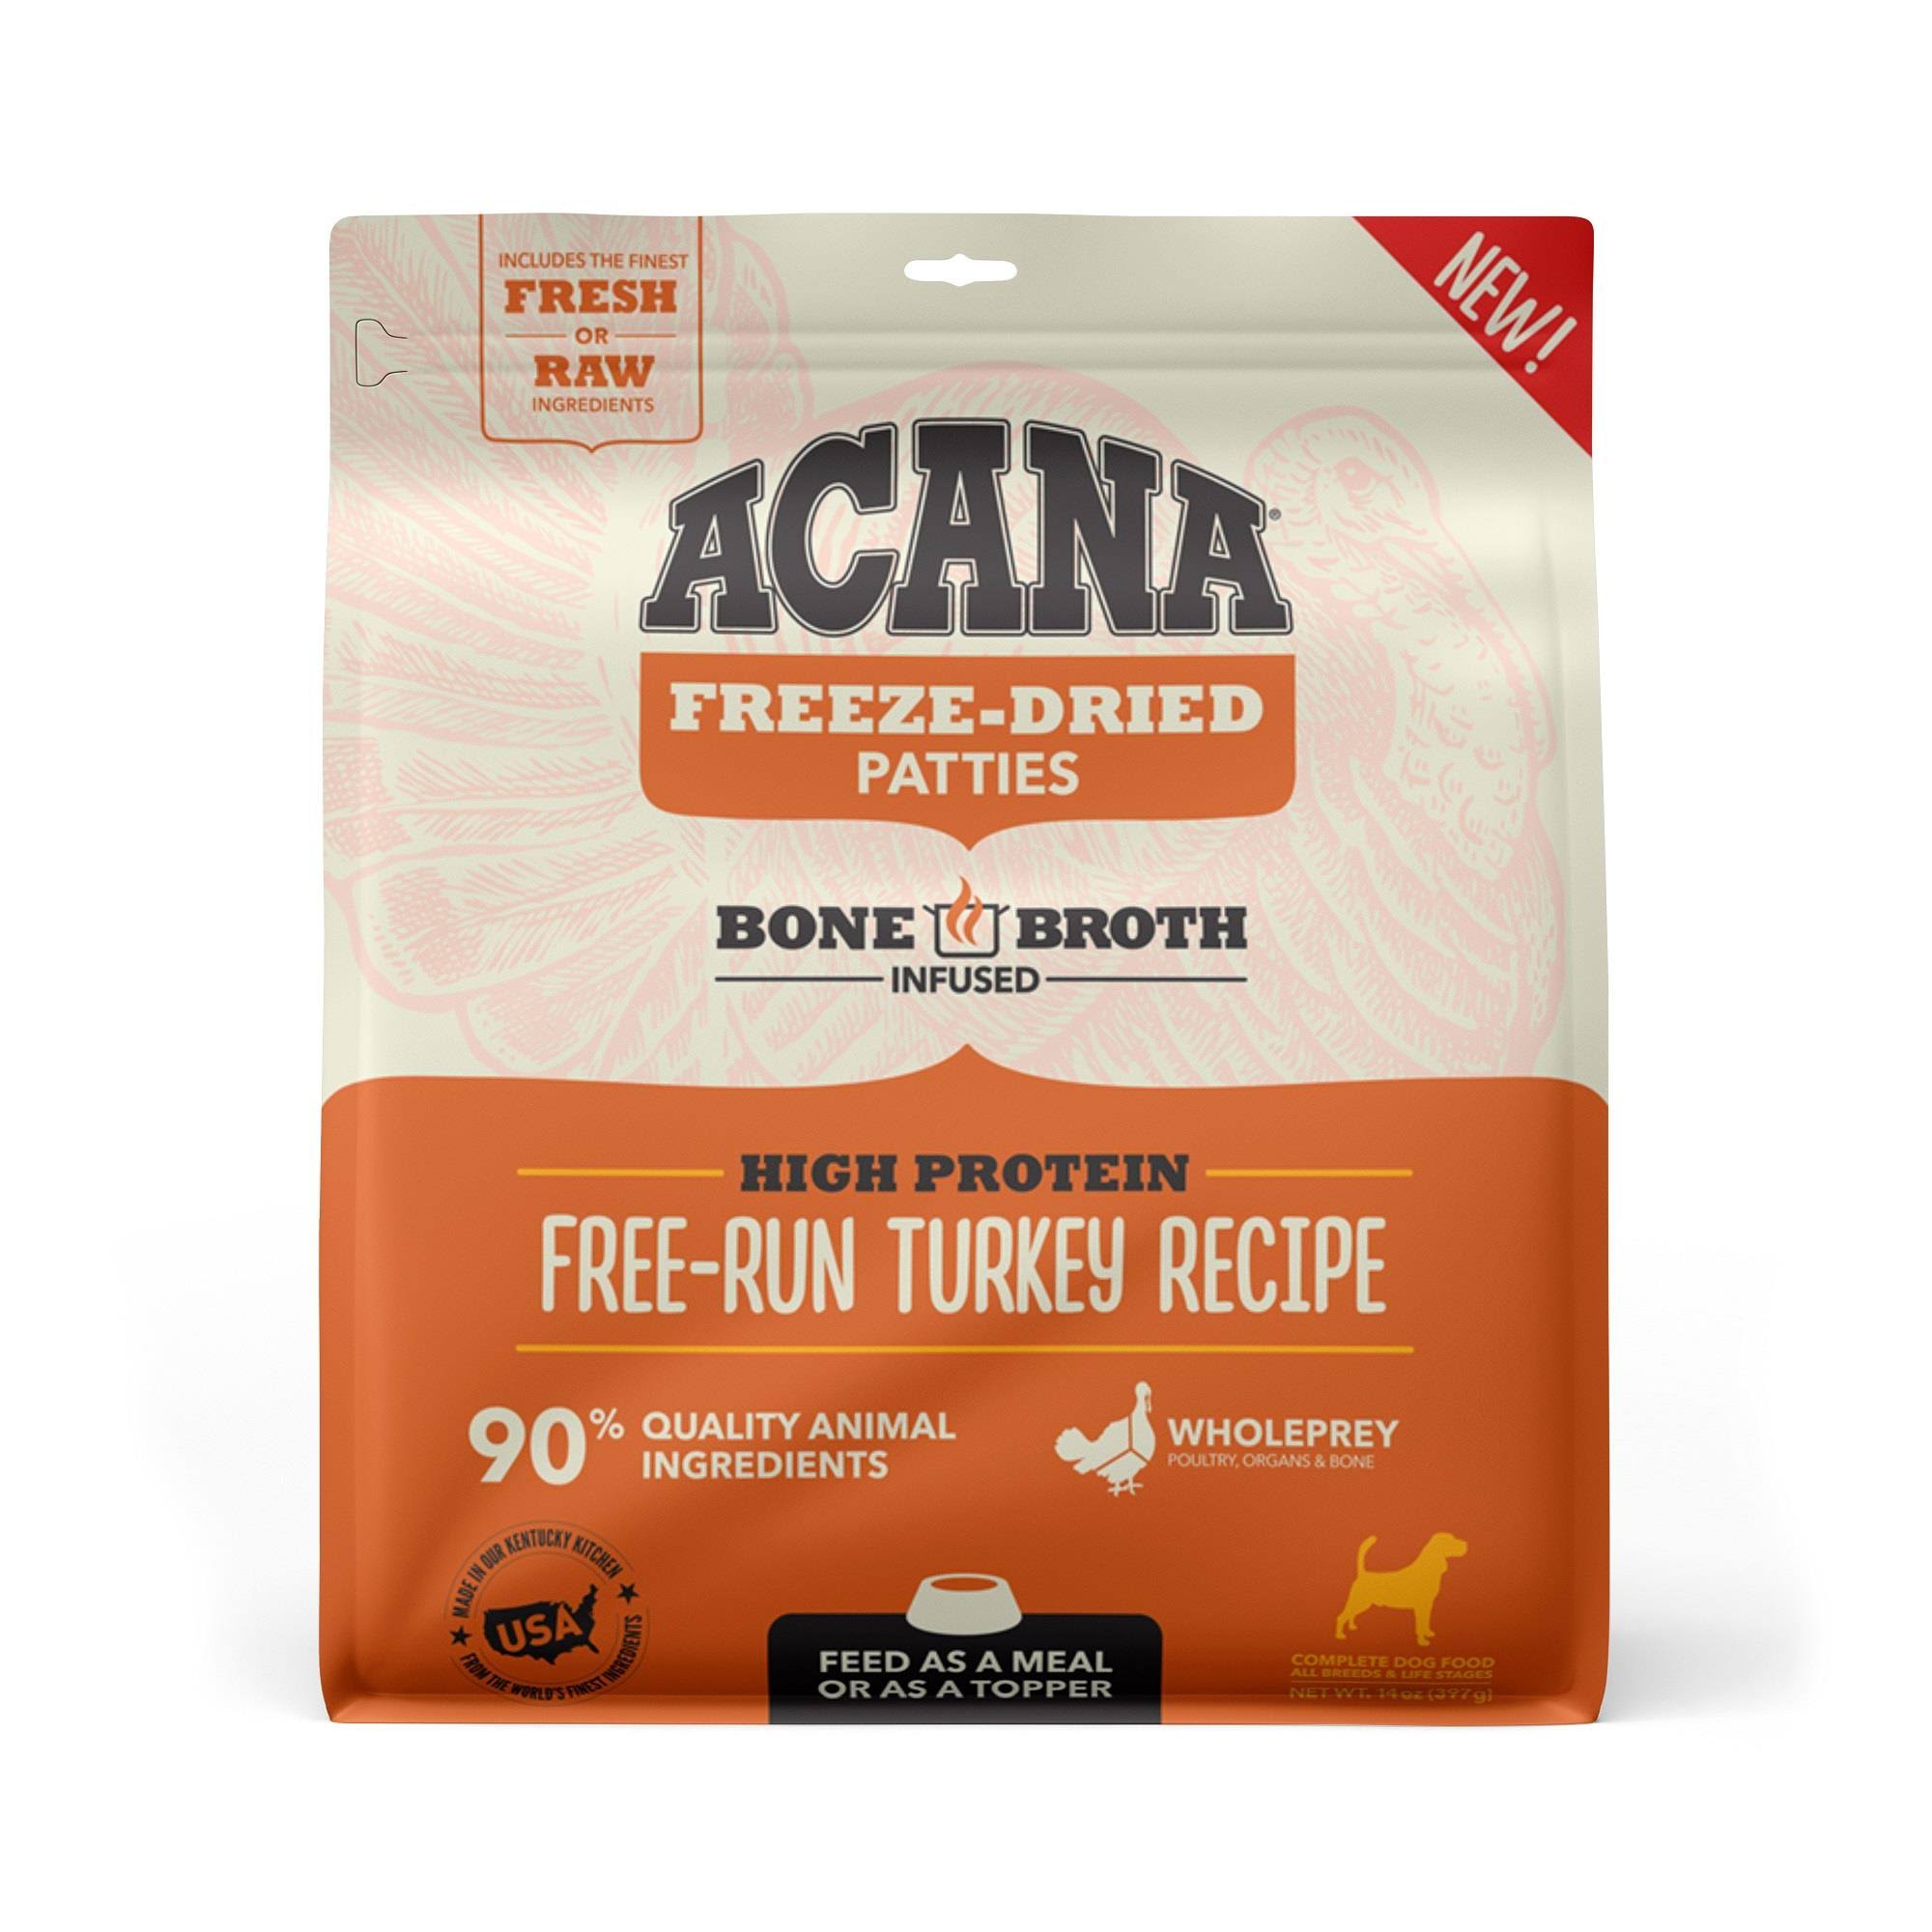 Acana Freeze-Dried Dog Food - Free-Run Turkey Recipe 14oz Patties